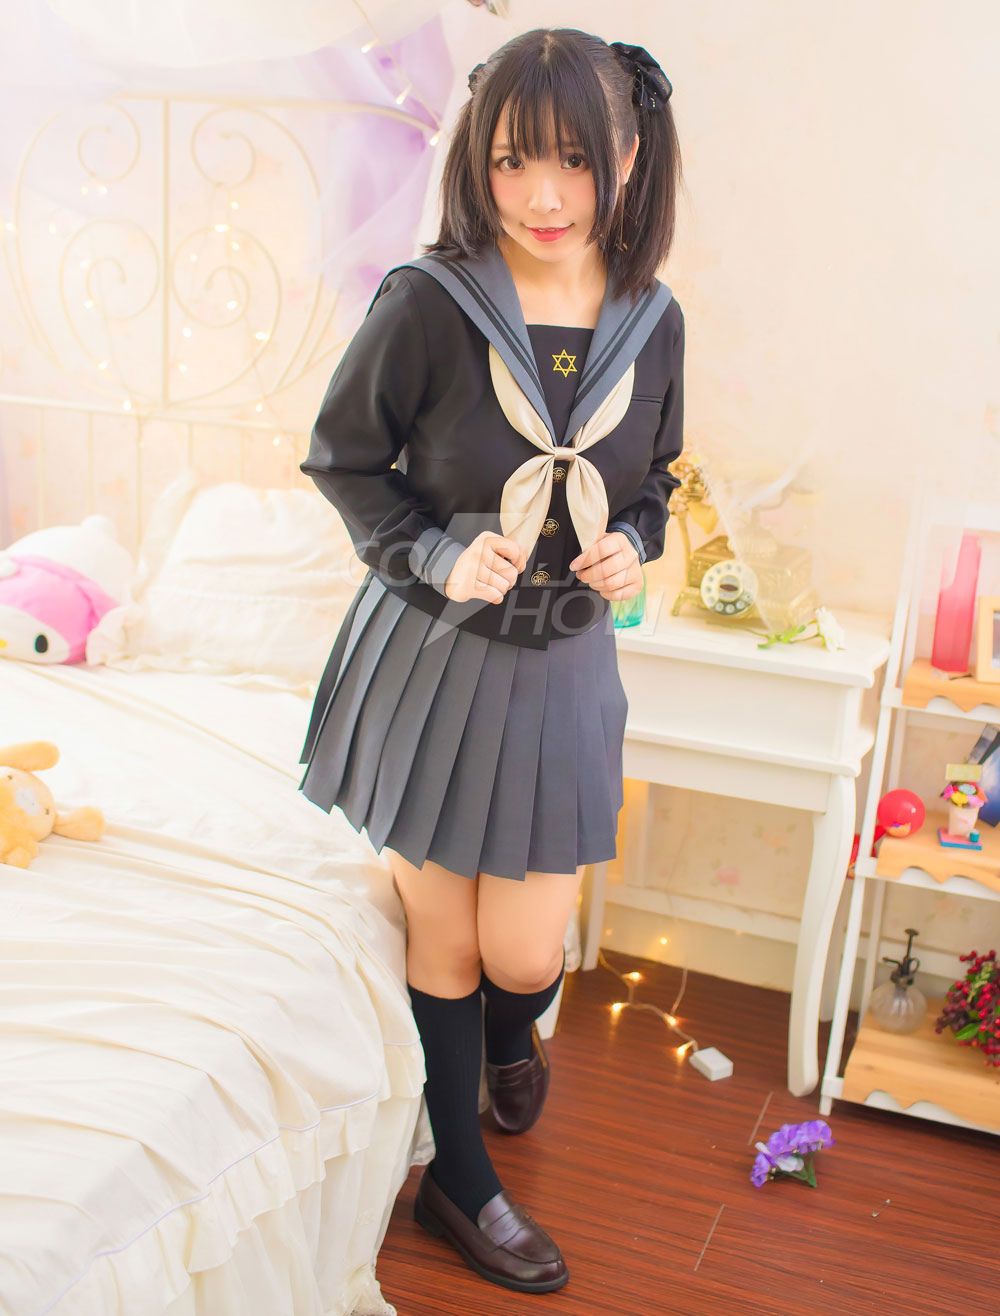 Japanese Anime School Uniform Sakura School Girl Cosplay - Cosplayshow.com